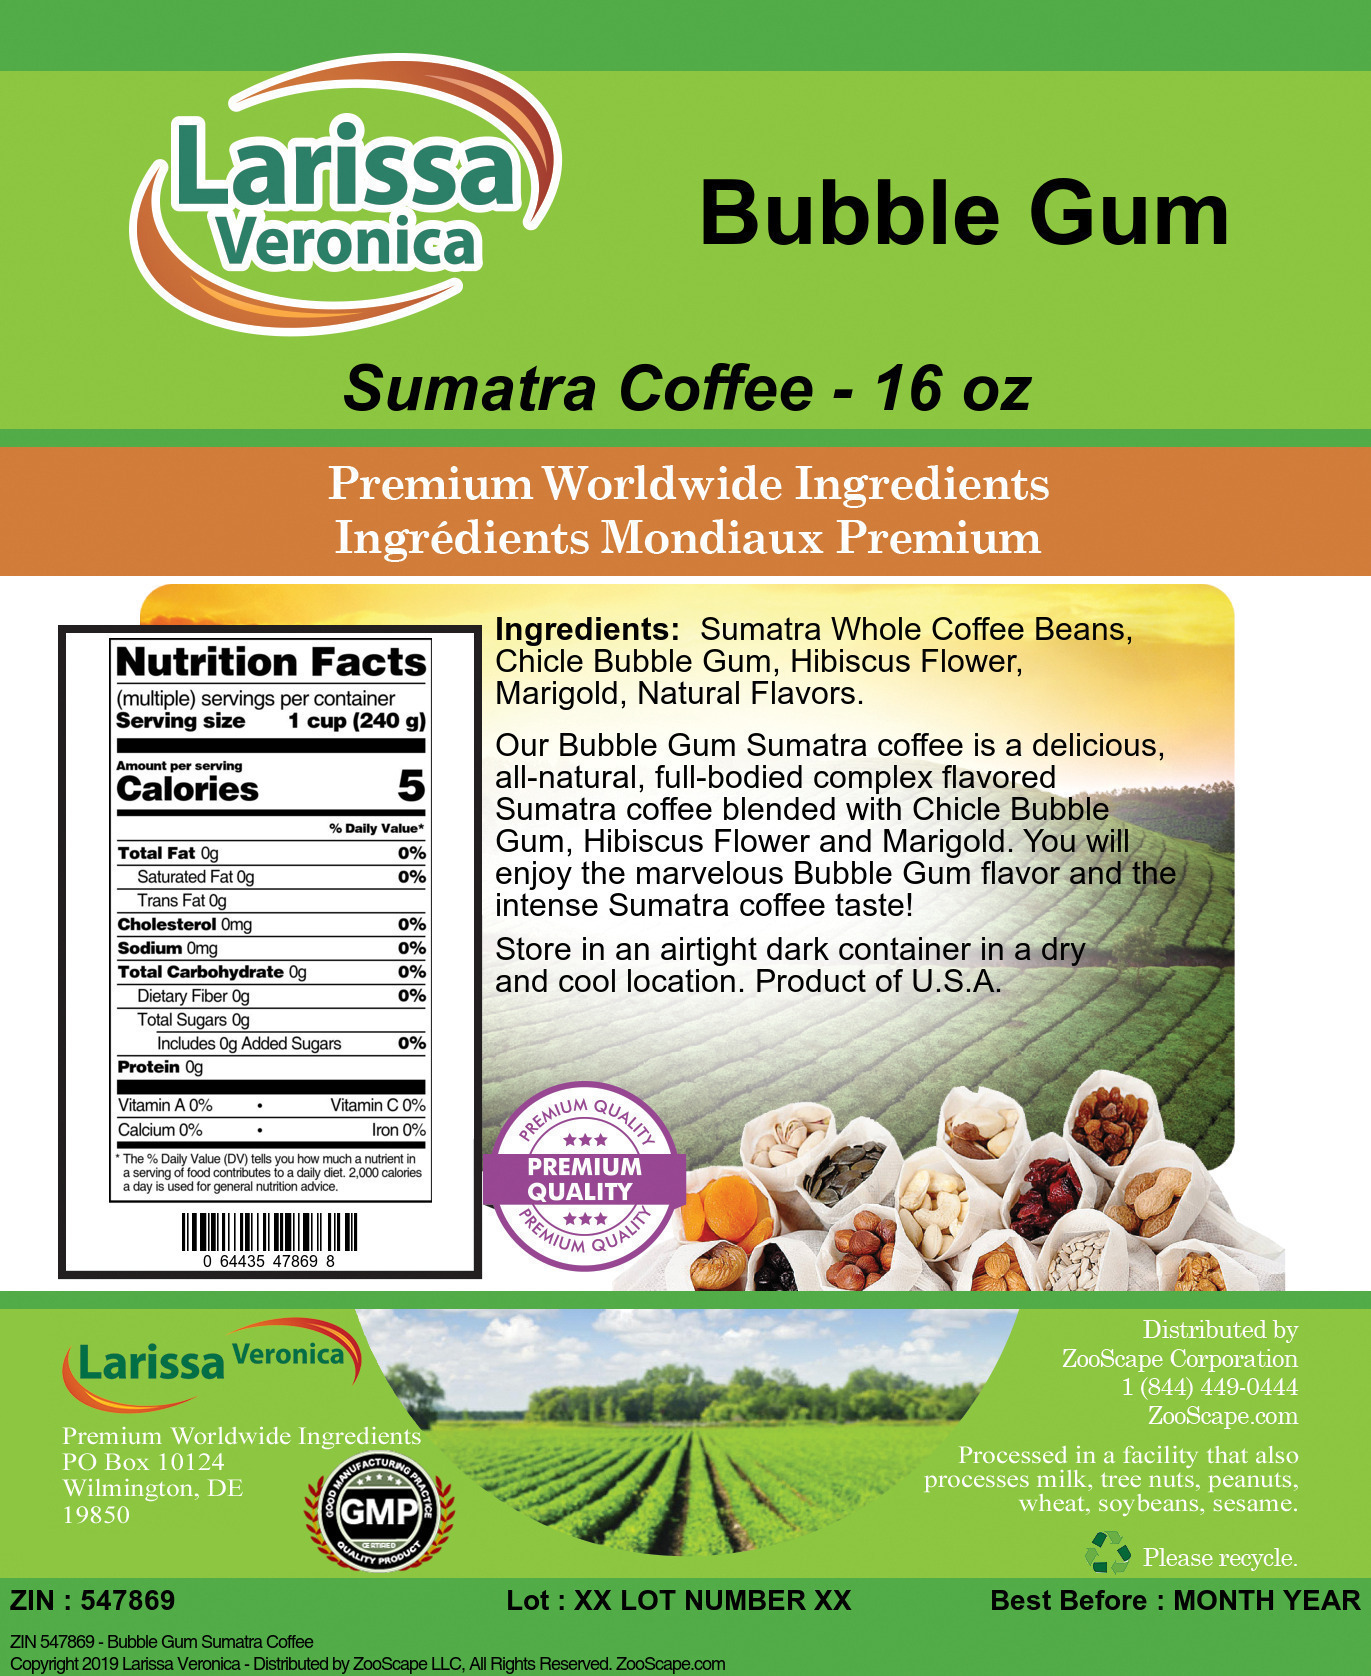 Bubble Gum Sumatra Coffee - Label